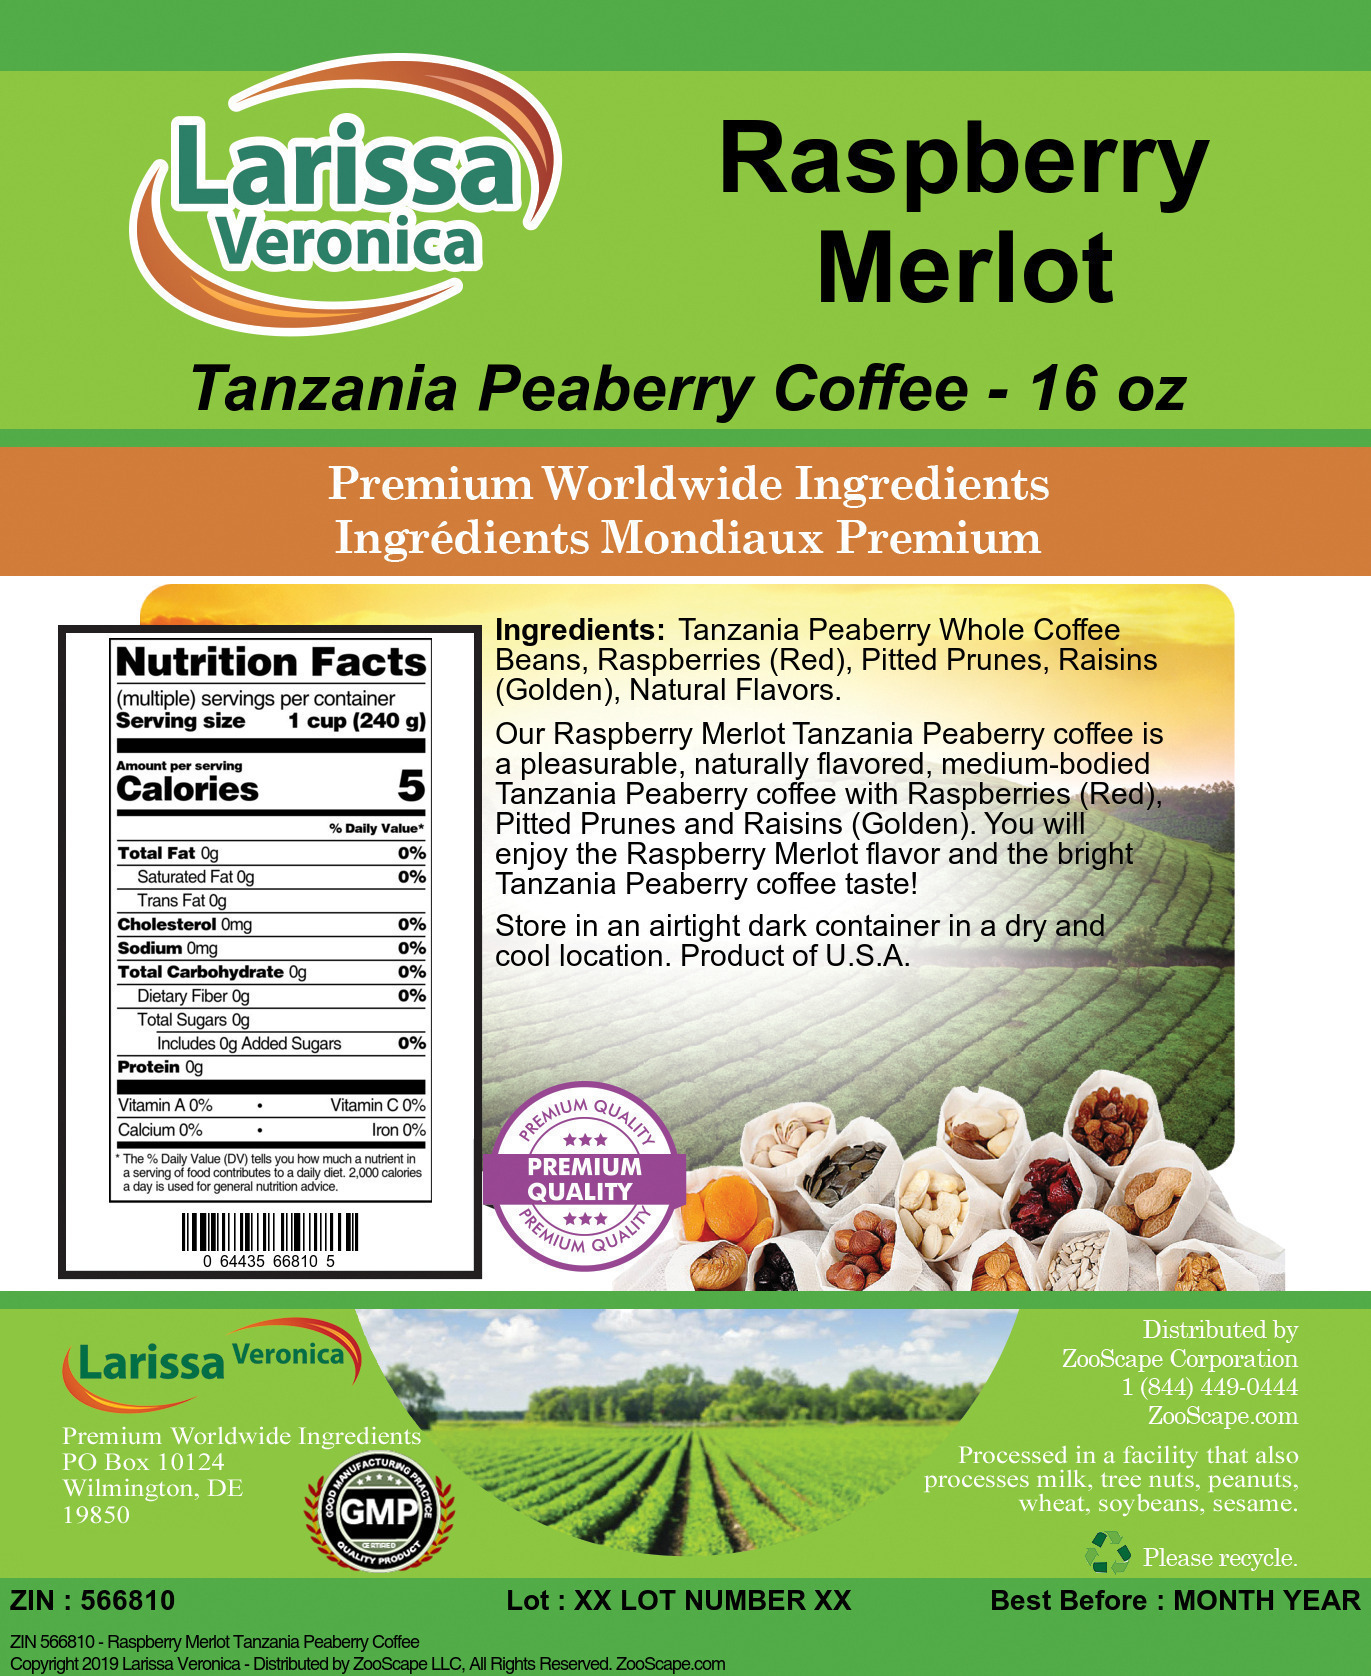 Raspberry Merlot Tanzania Peaberry Coffee - Label